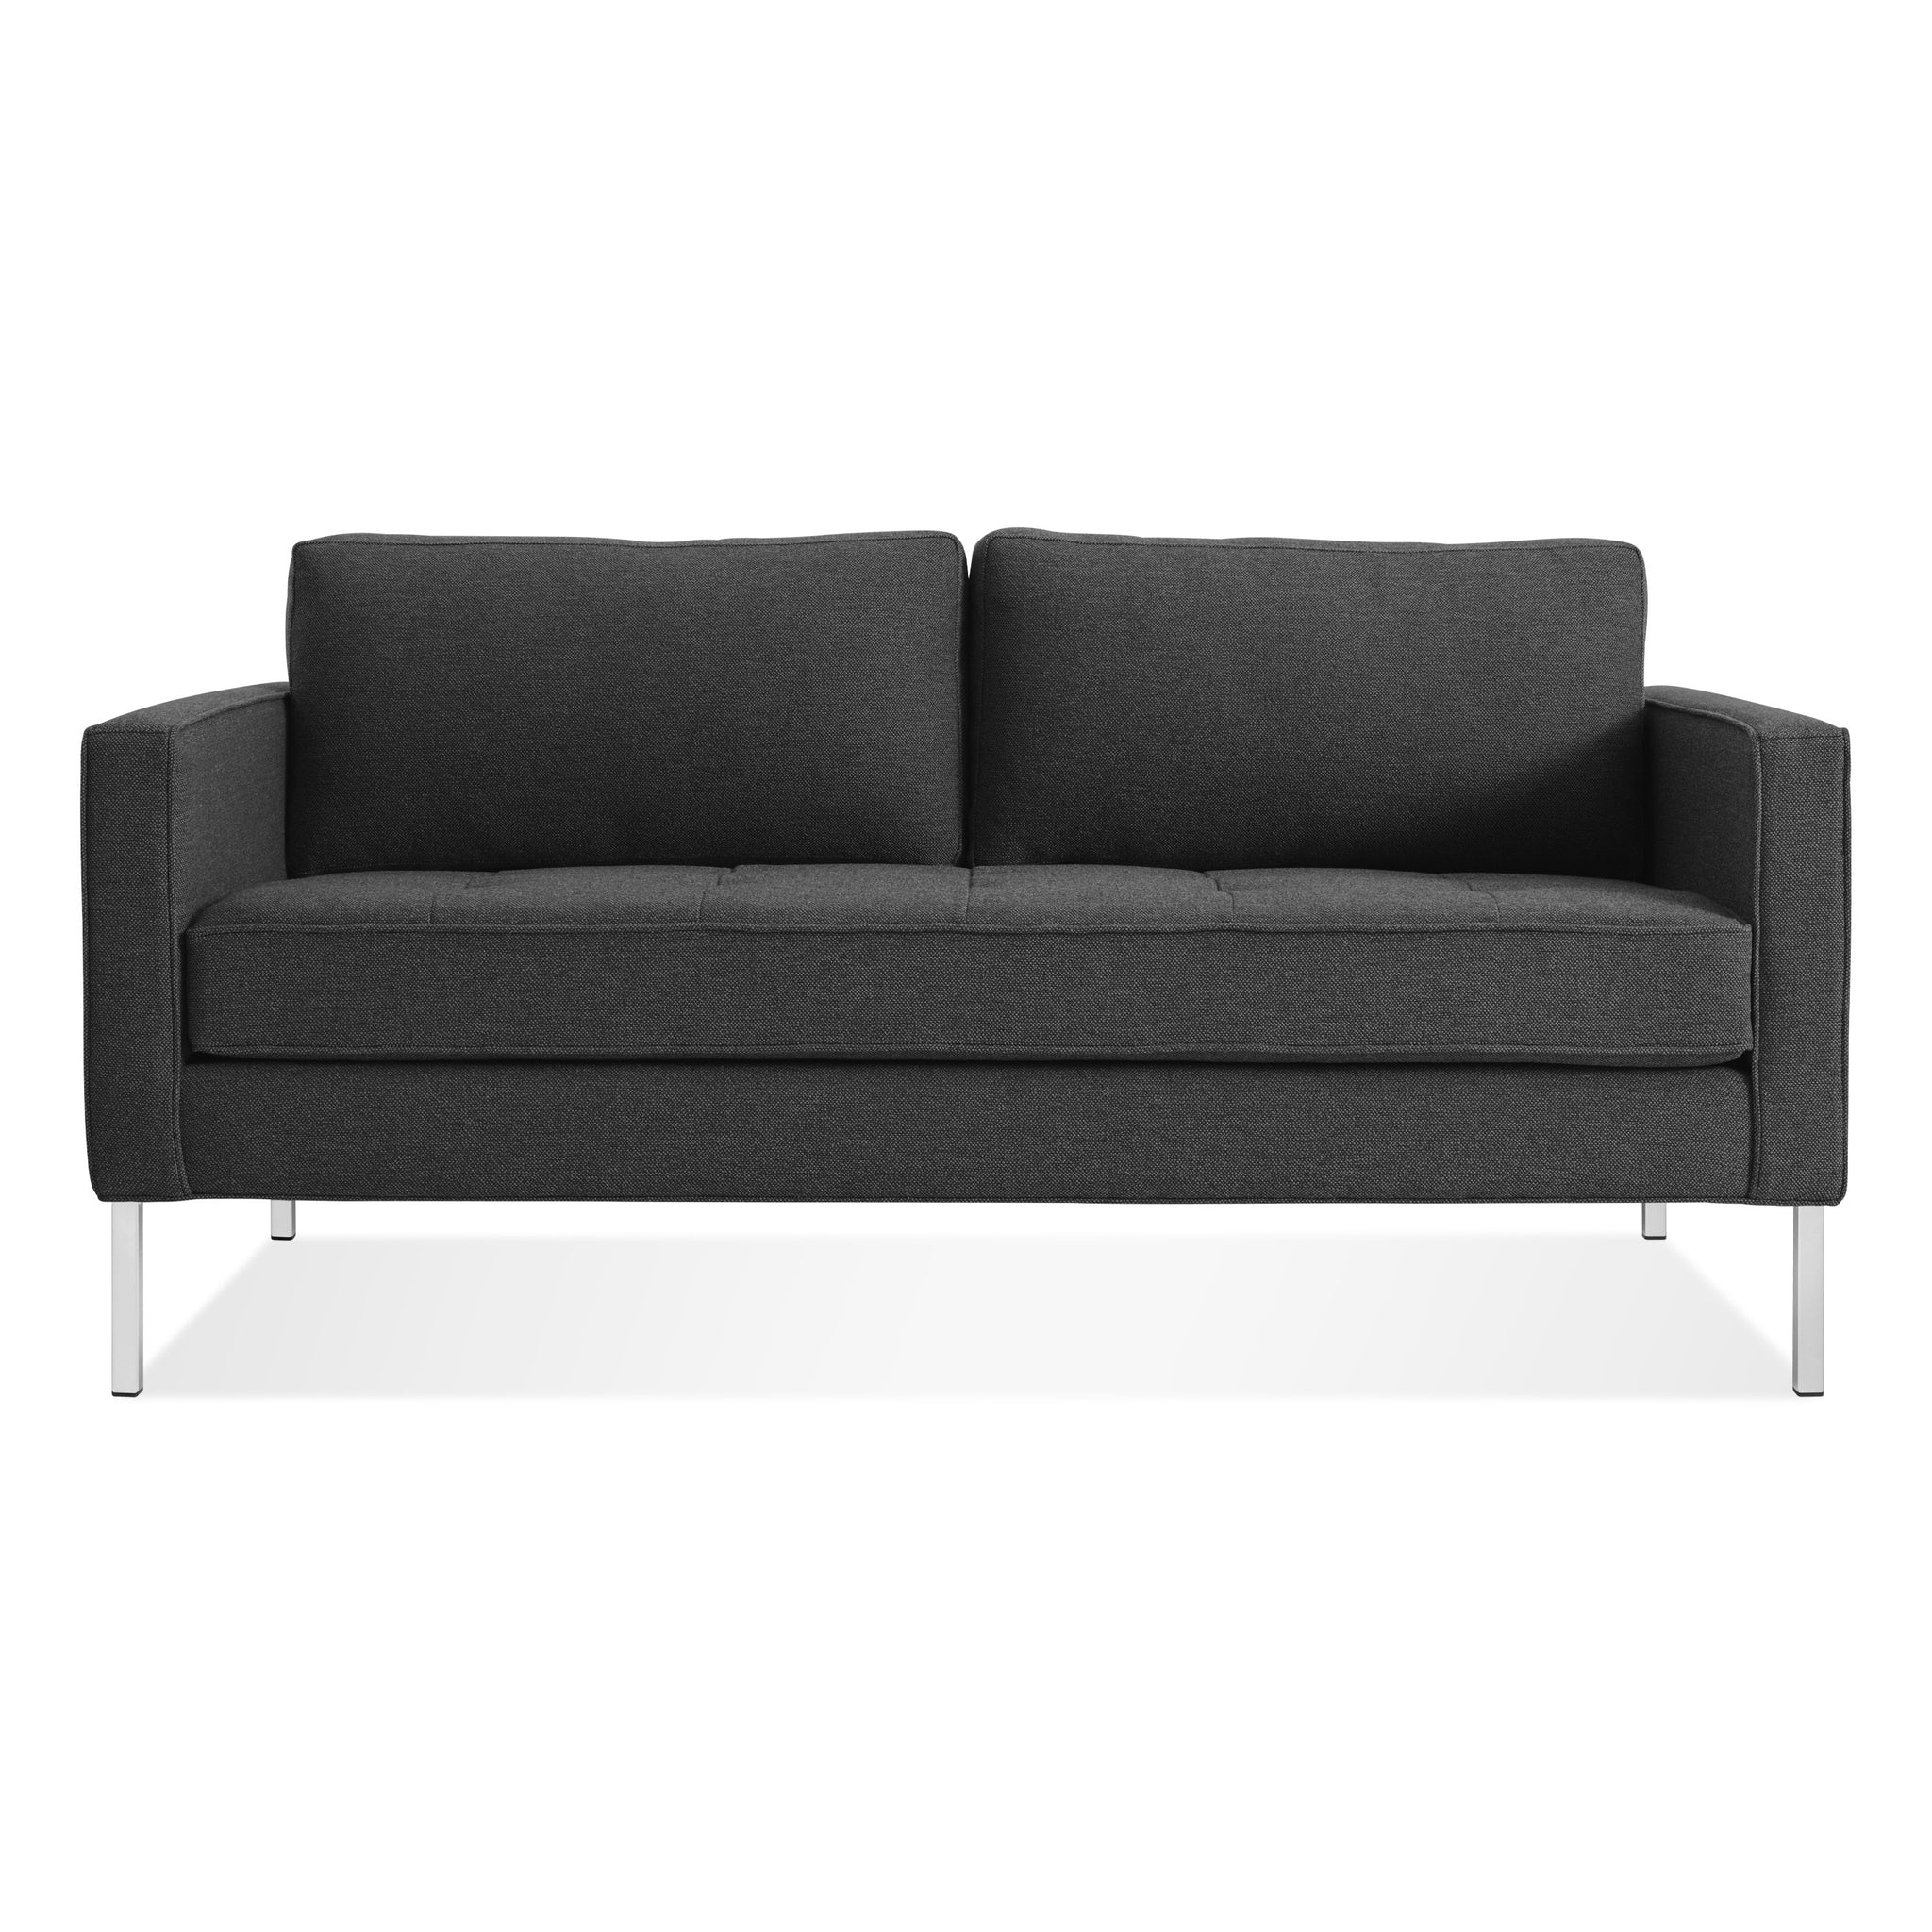 blu dot paramount 66 inch sofa stainless steel